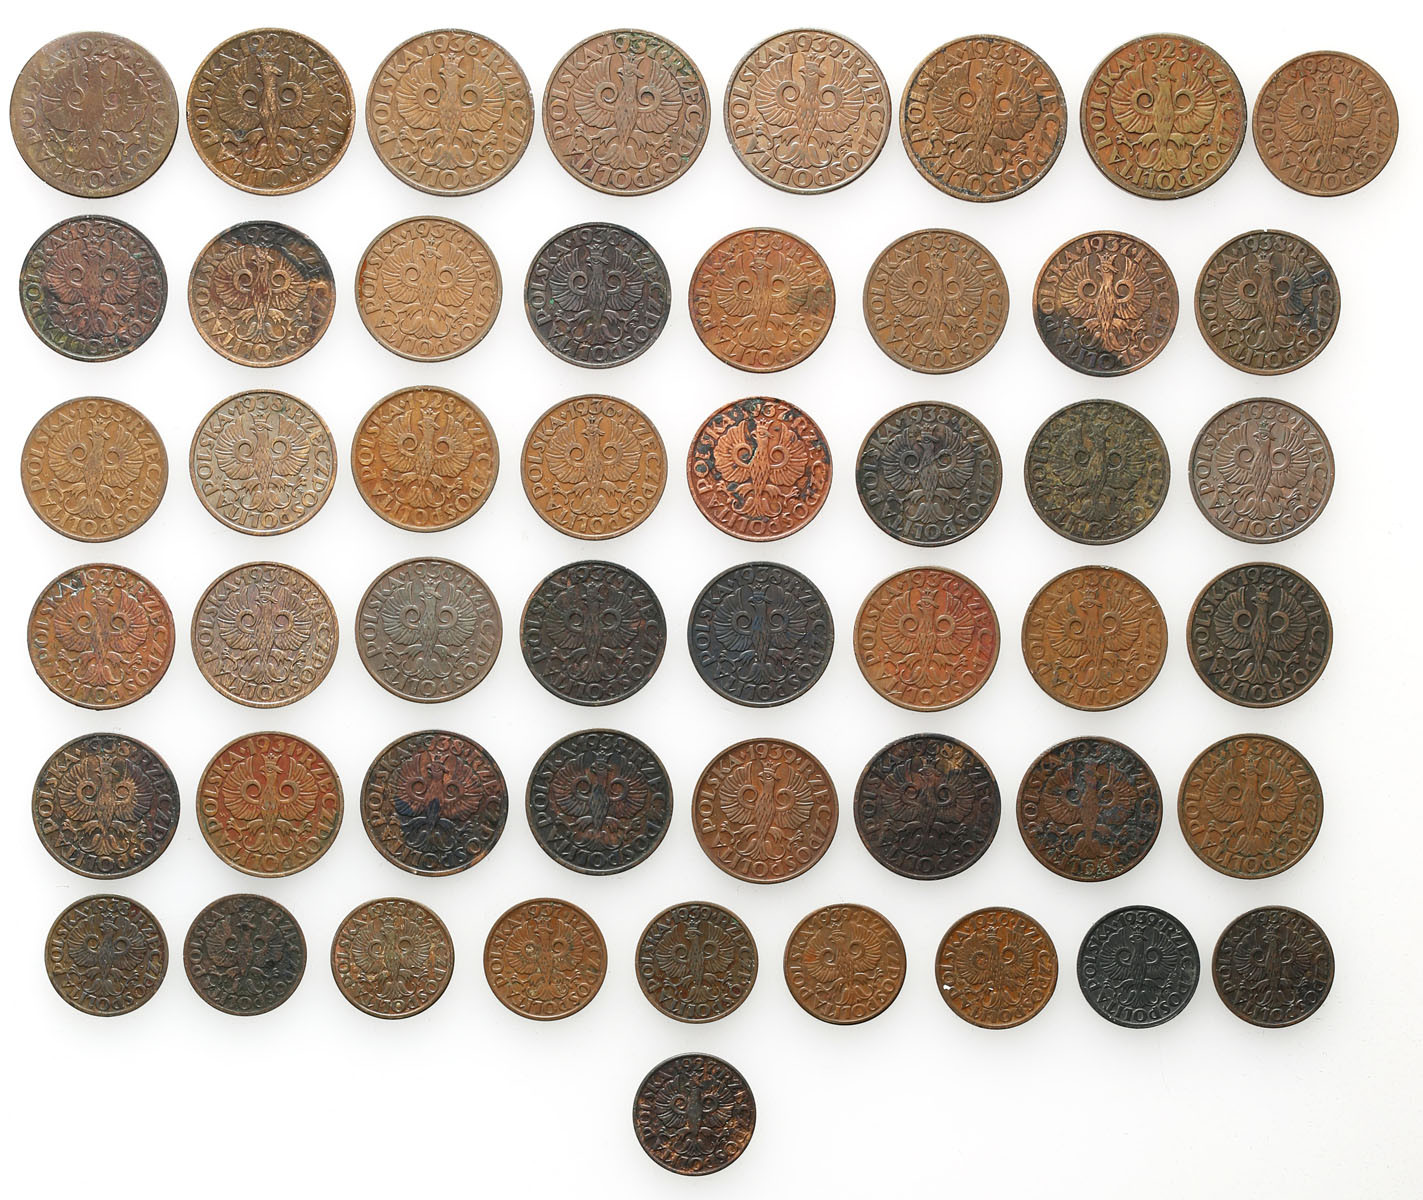 II RP, Generalna Gubernia. 1, 2, 5 groszy 1923-1939, zestaw 50 monet